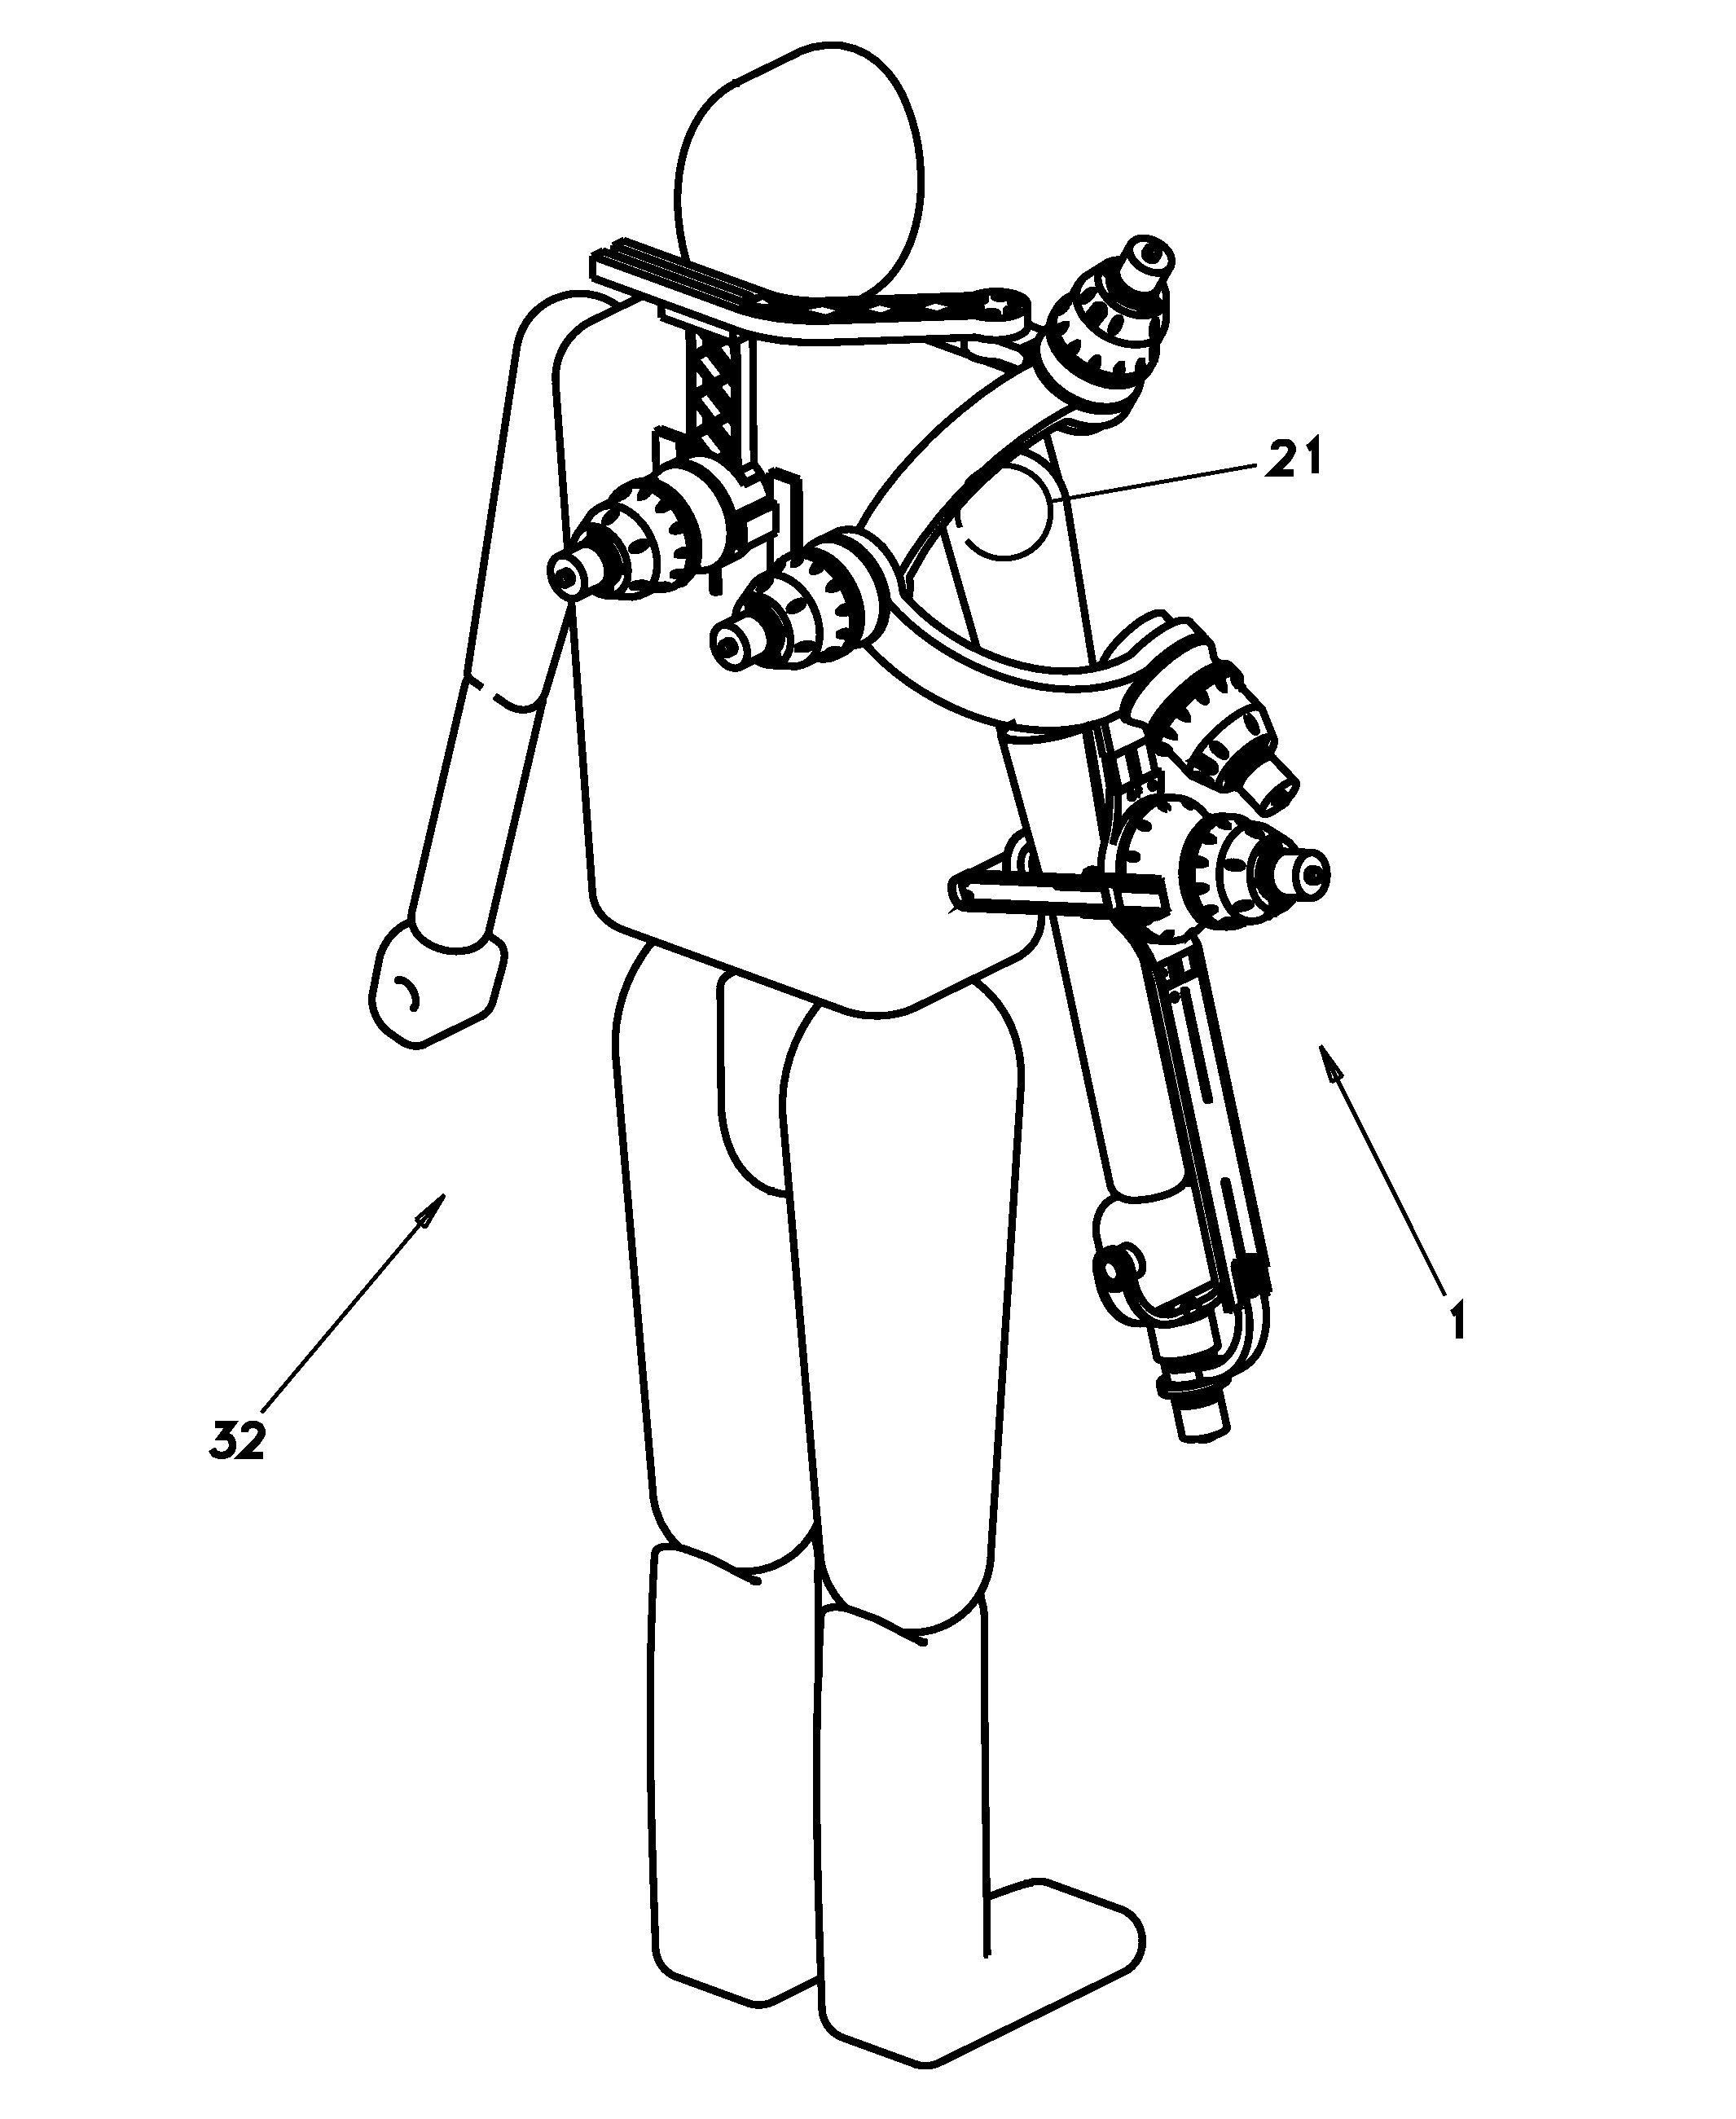 Portable arm exoskeleton for shoulder rehabilitation